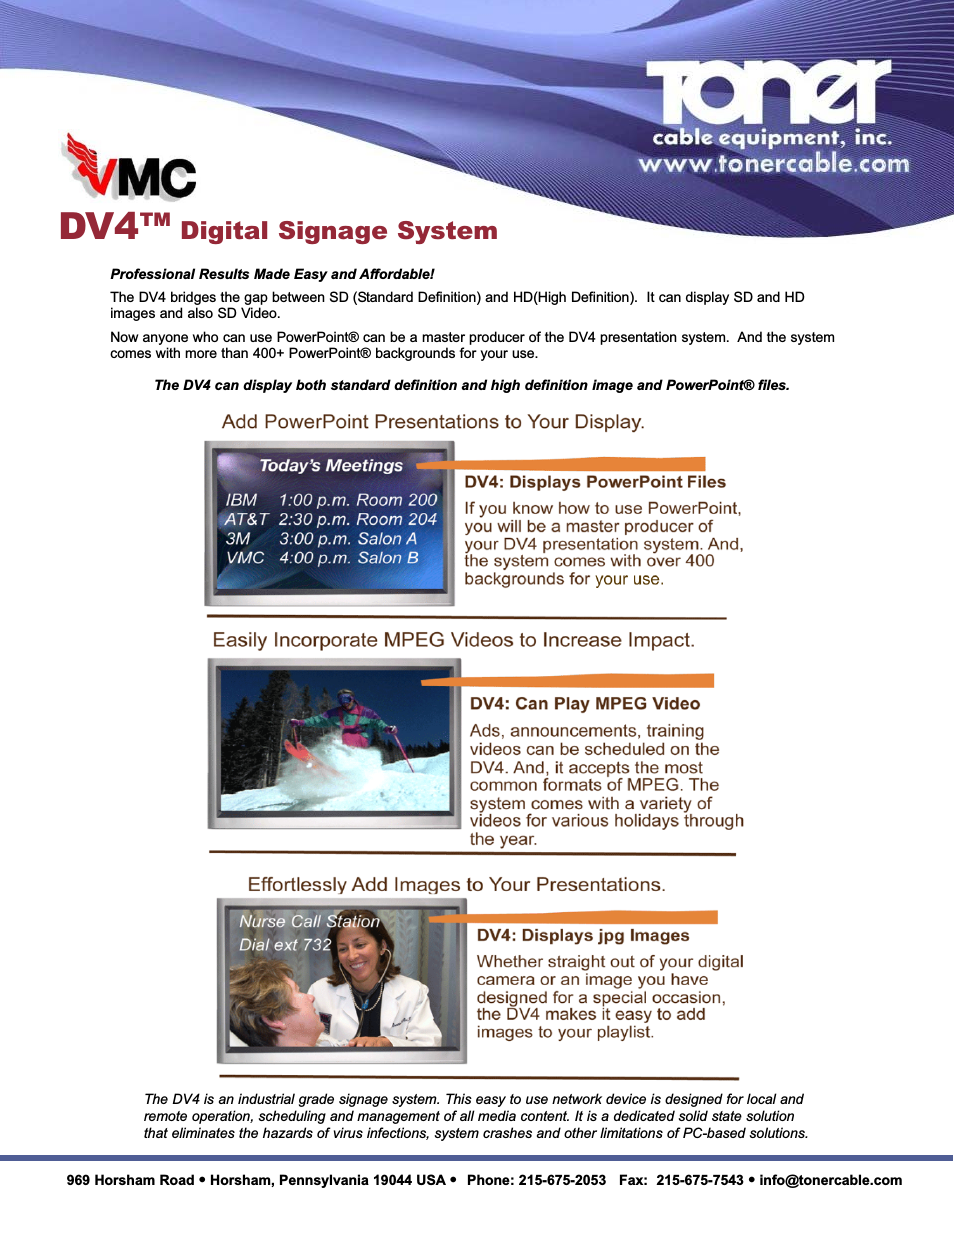 DV4 Digital Signage System